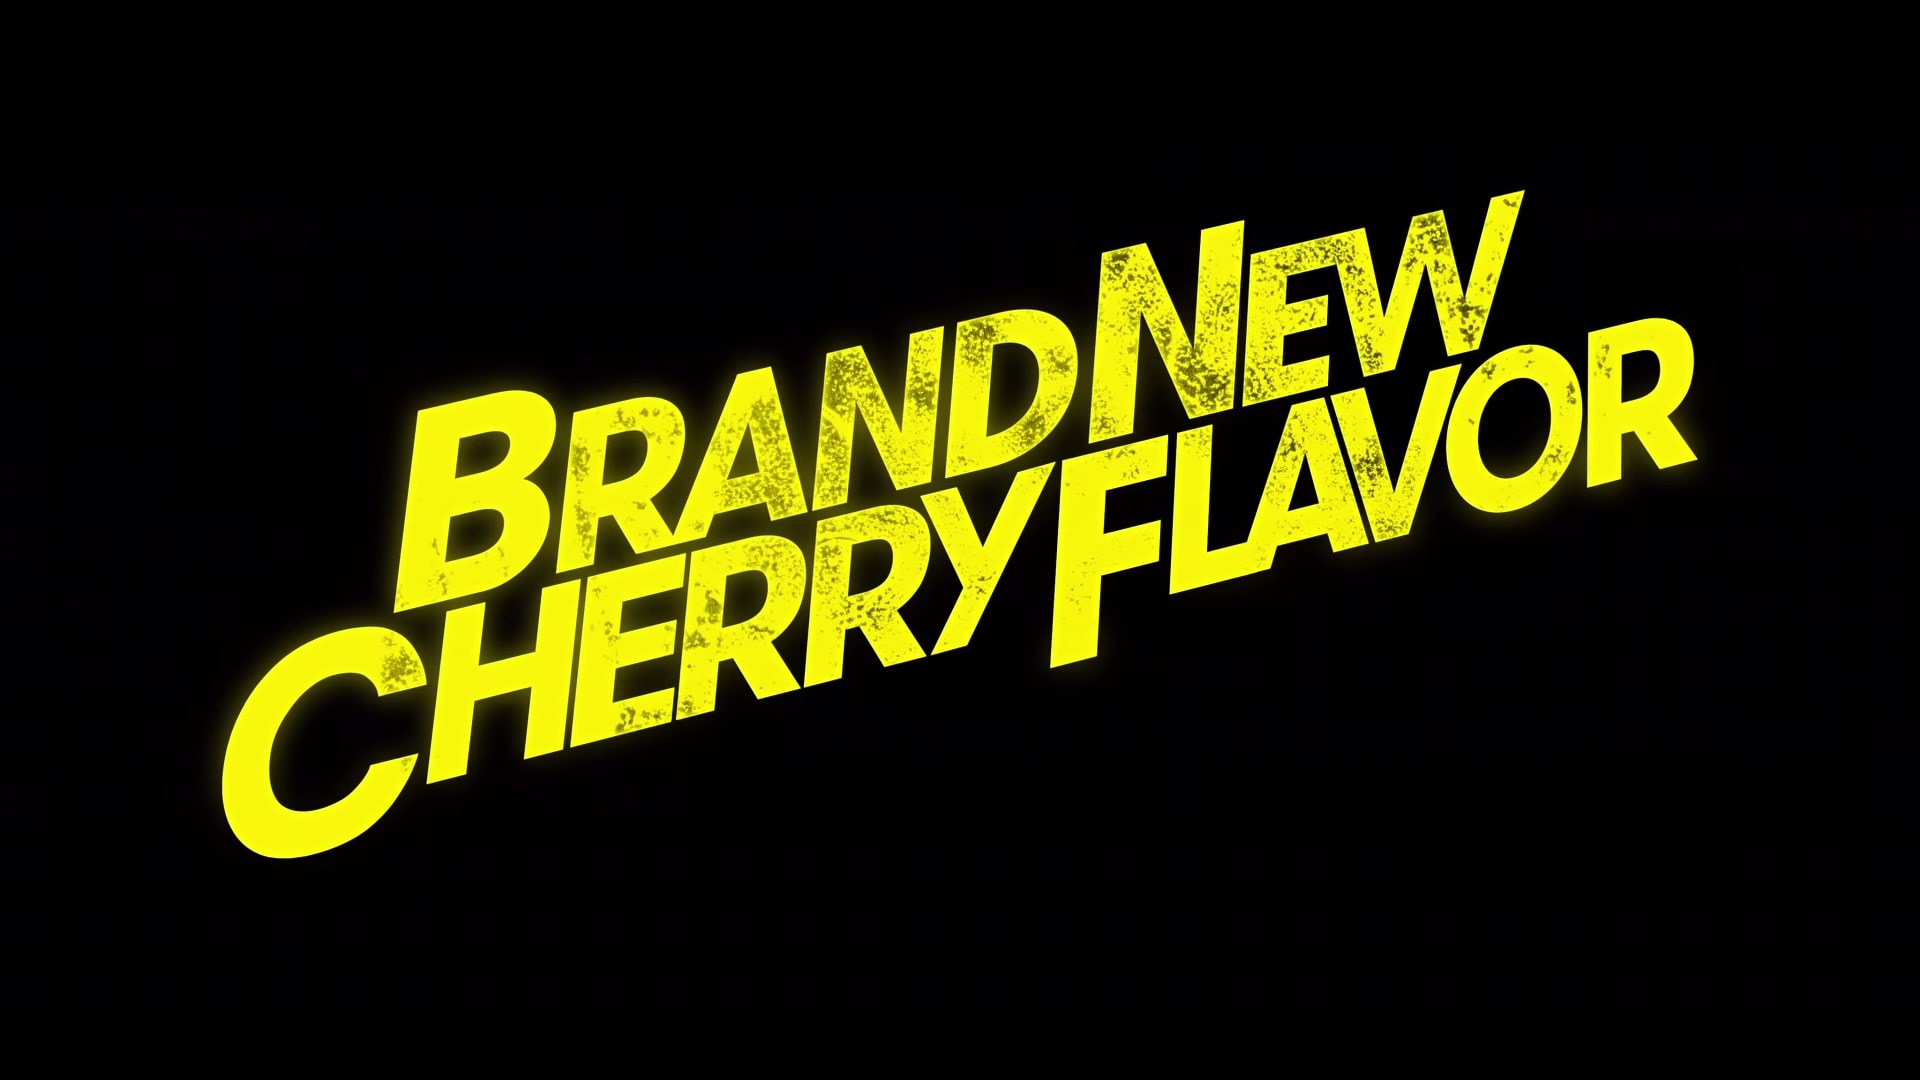 Netflix Brand New Cherry Flavor Trailer, Coming to Netflix in August 2021